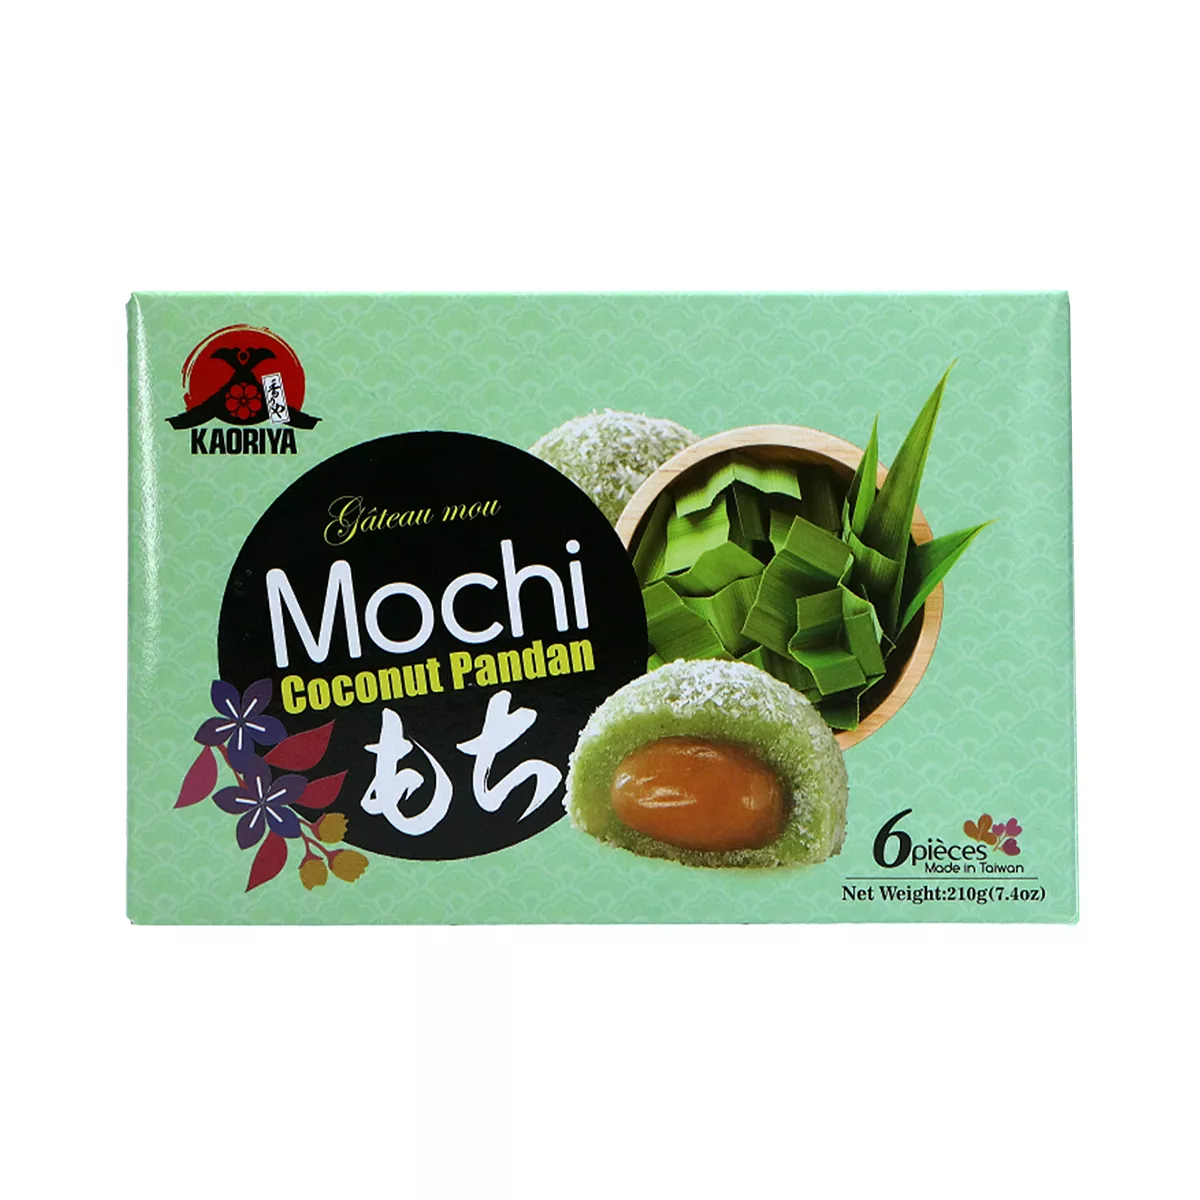 Mochi cu pandan si cocos KAORIYA 210g, [],asianfood.ro